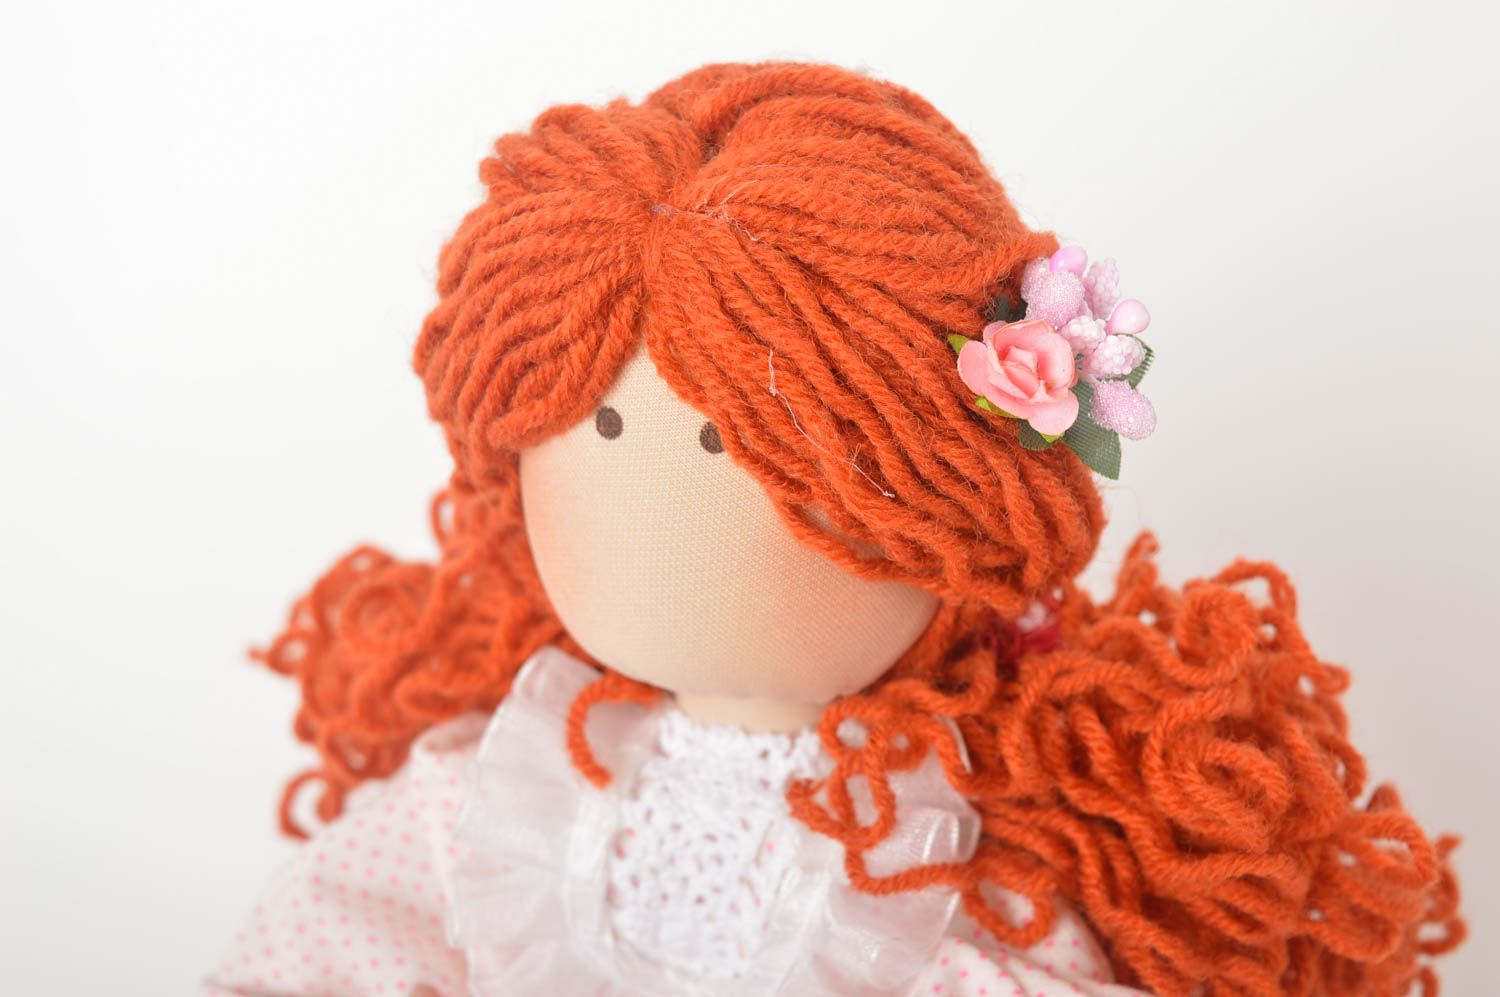 Handmade doll ginger hair stuffed toy designer childrens toy decoration ideas photo 3